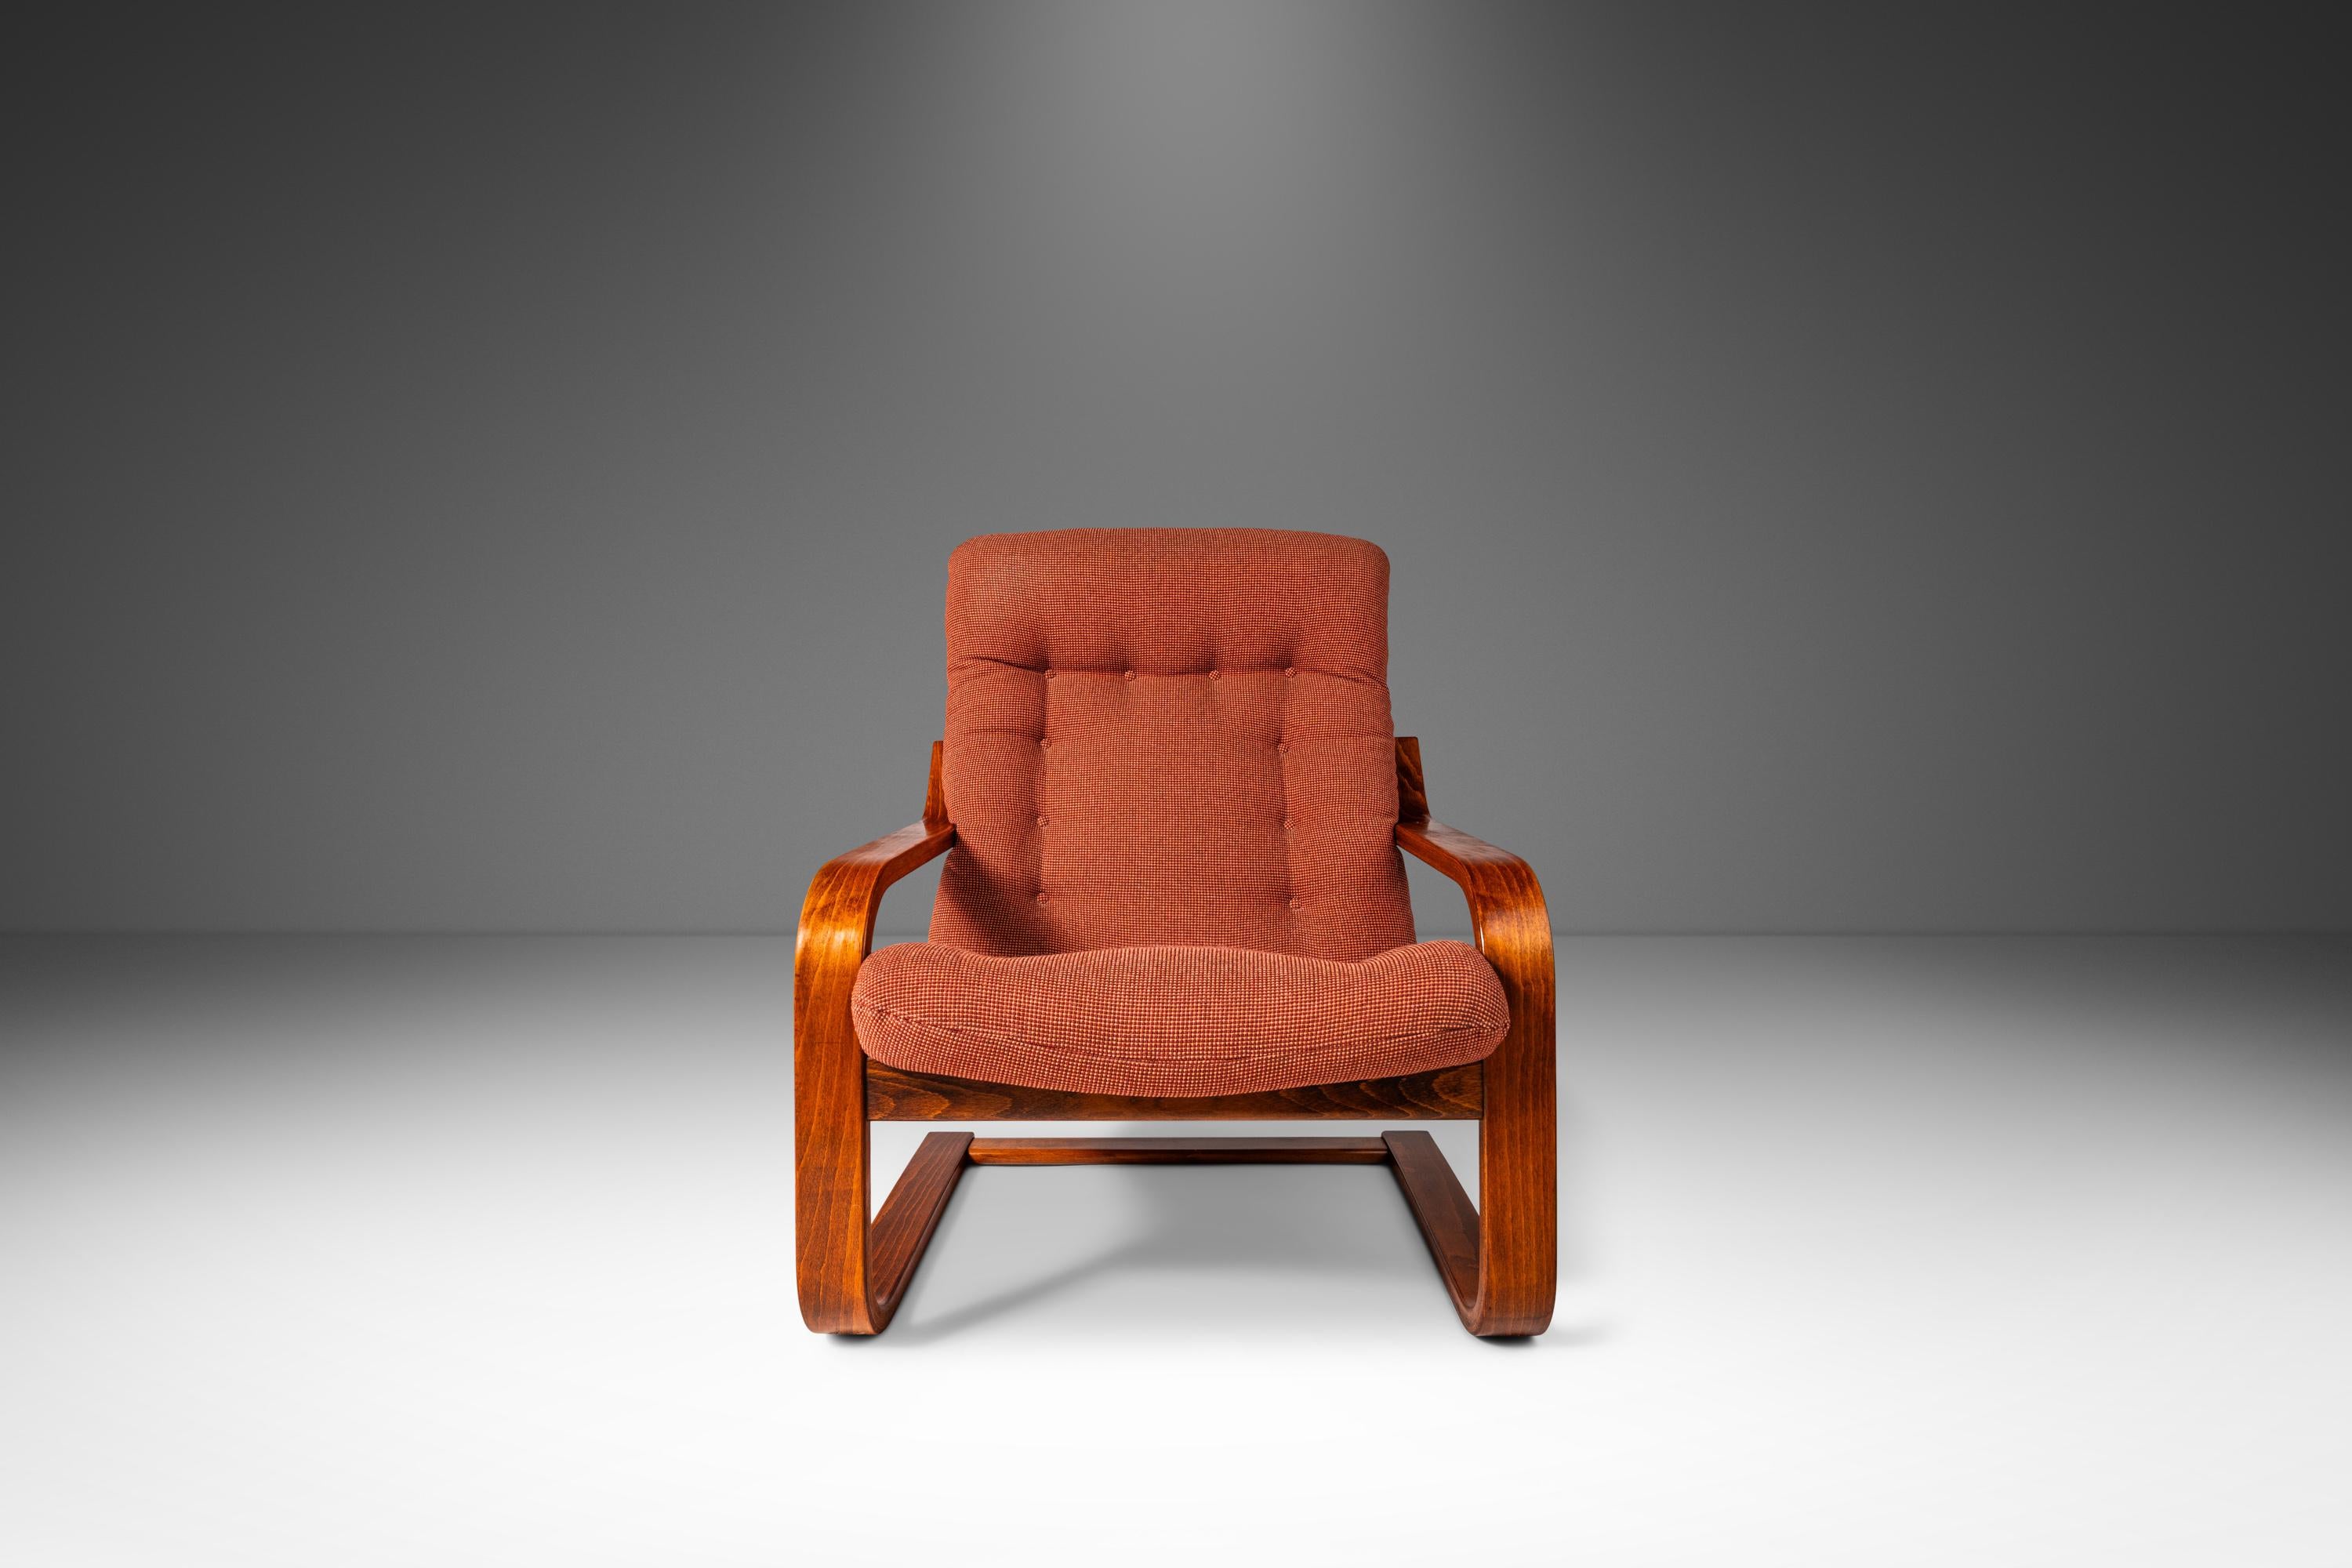 Norwegian Bentwood Lounge Chair in Beech and Original Fabric by Westnofa, Norway, c. 1970s